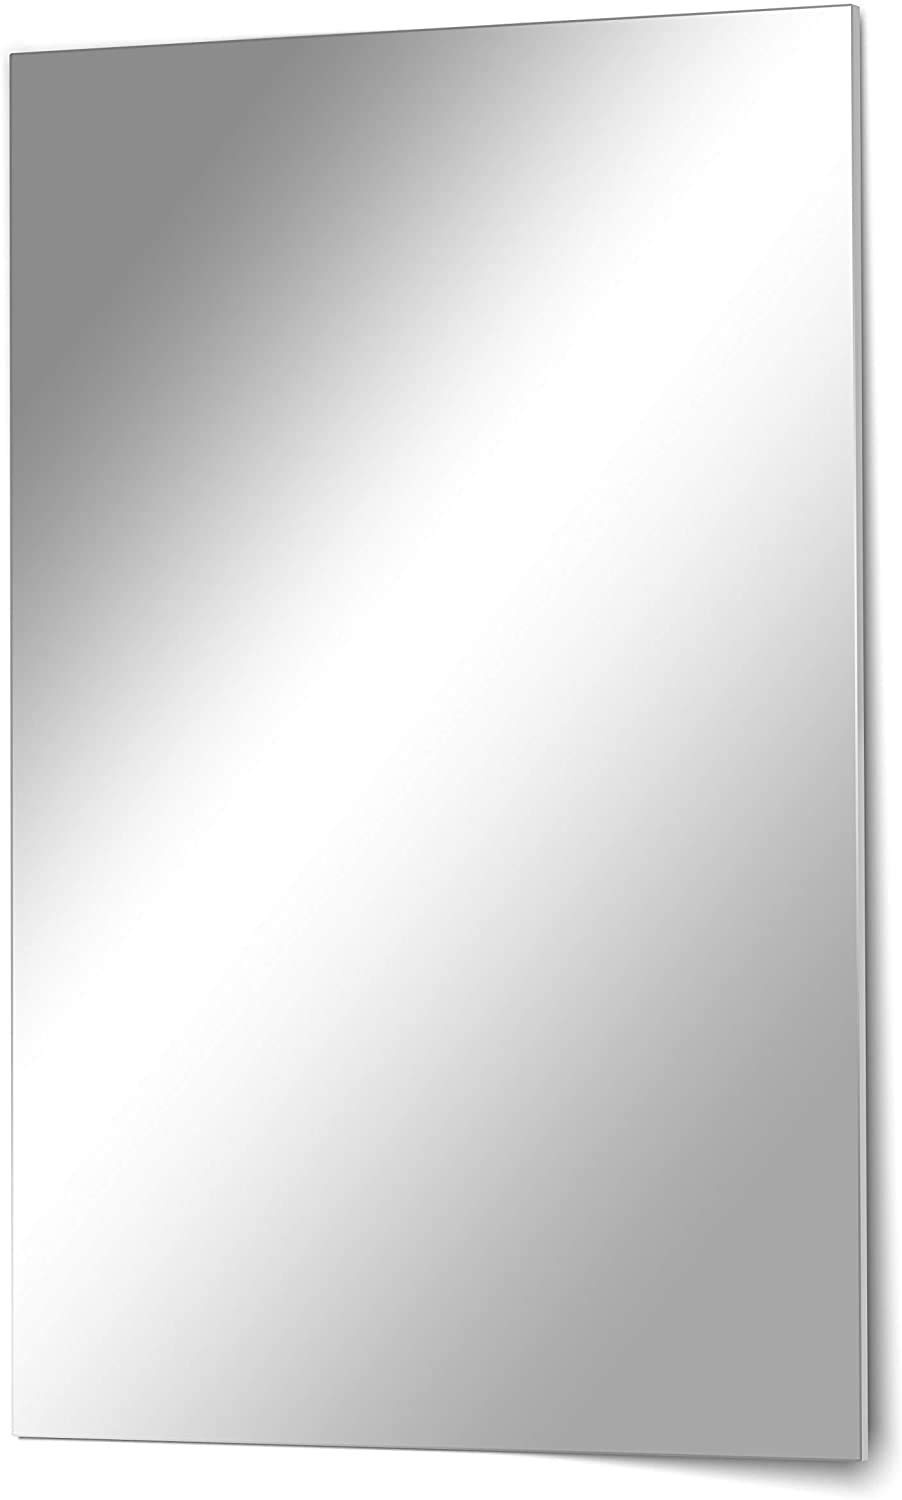 Kristallspiegel / Wandspiegel / Badspiegel Rahmenlos ohne Facette Mirror Made in Germany incl. Befestigungsmaterial (50 x 40), Silber